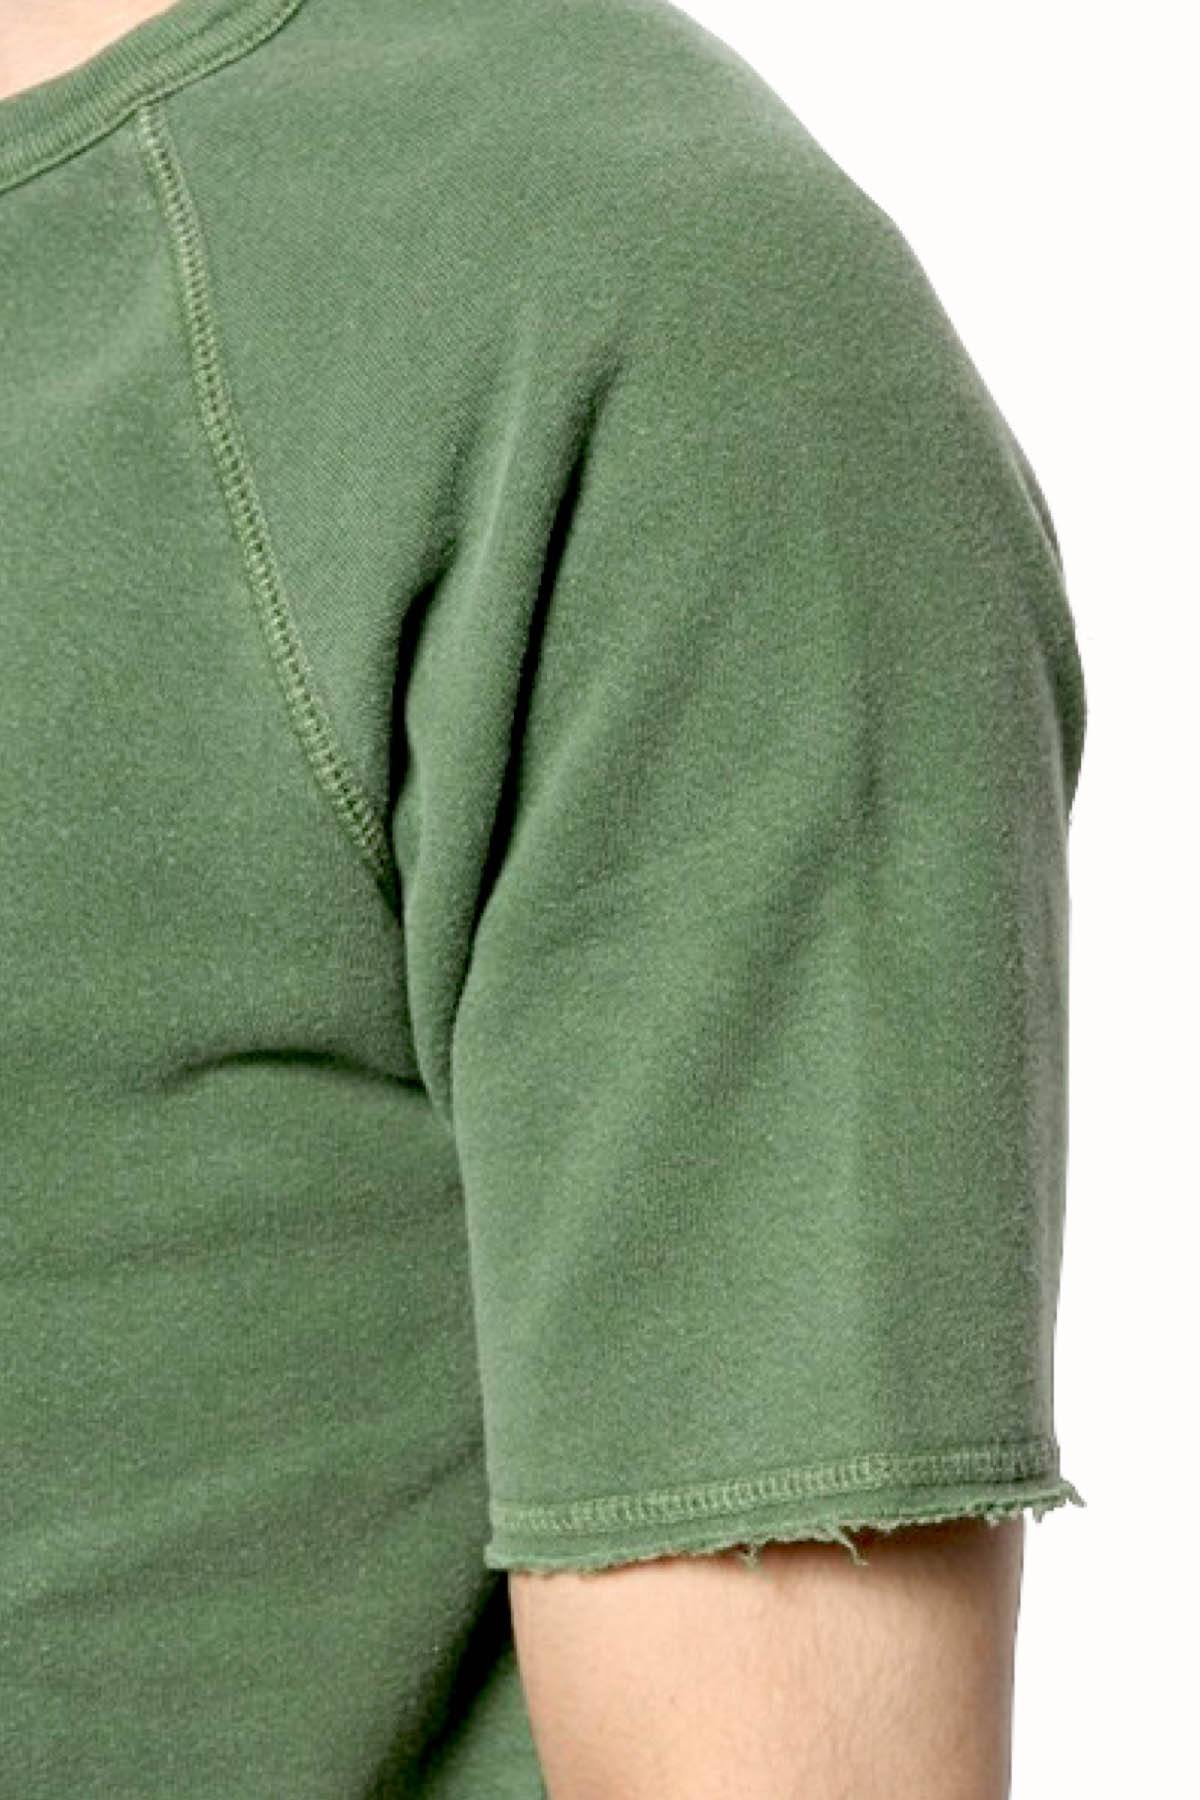 Rxmance Unisex Forest Green Short Sleeve Sweatshirt